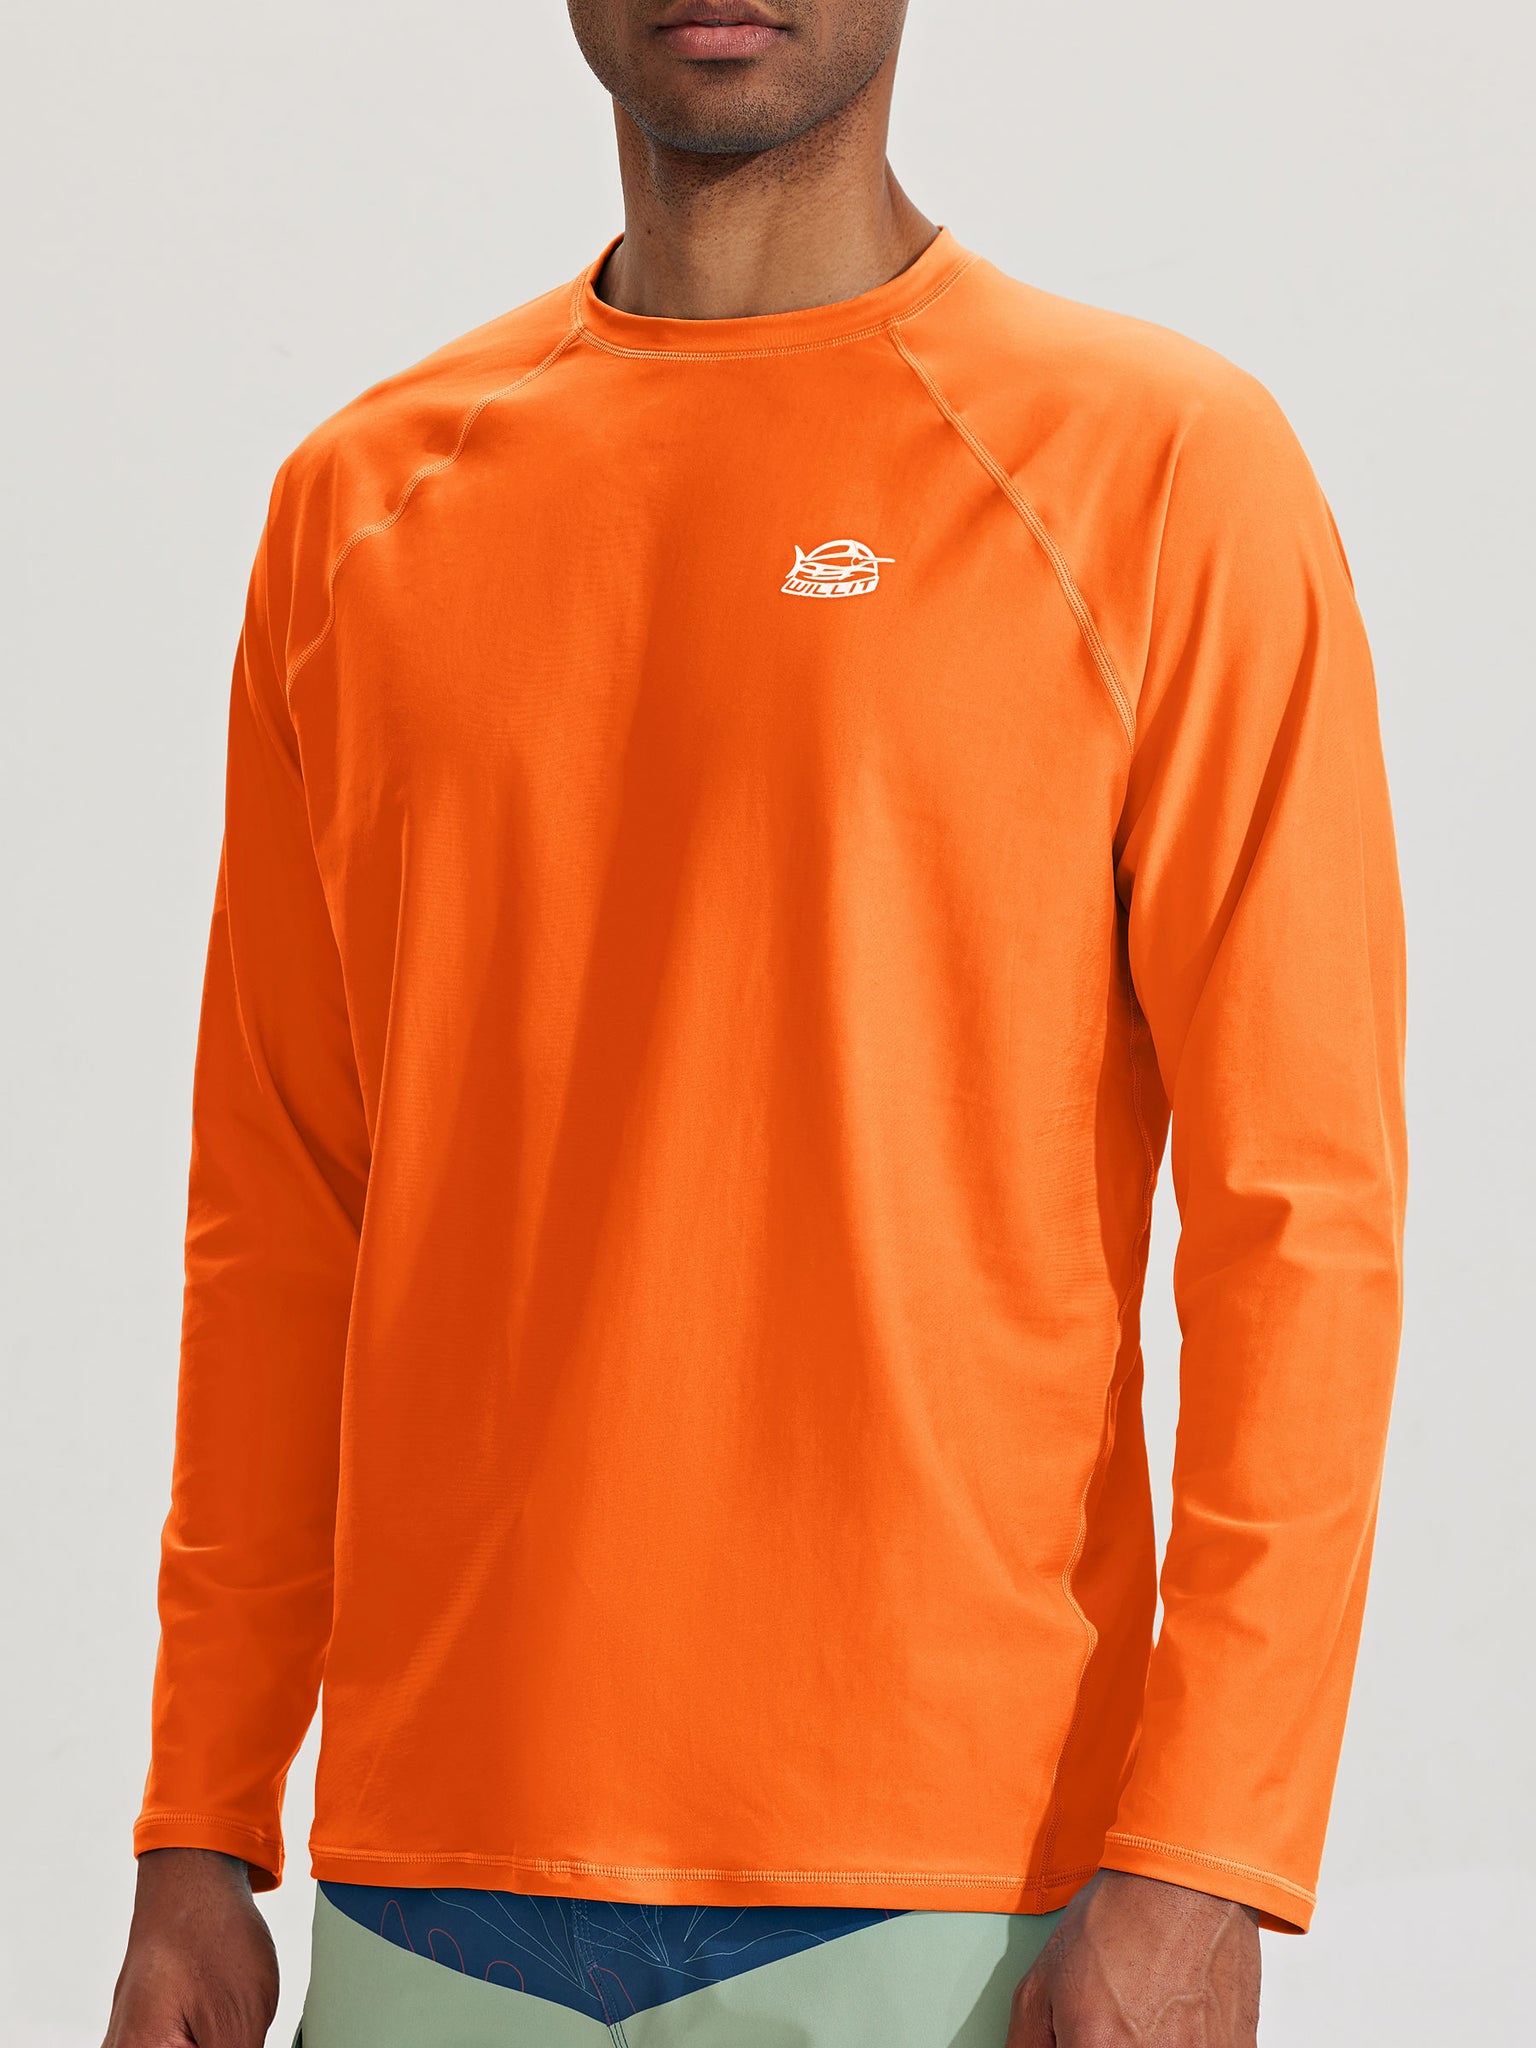 Men's Sun Protection Long Sleeve Shirt_Orange_model1